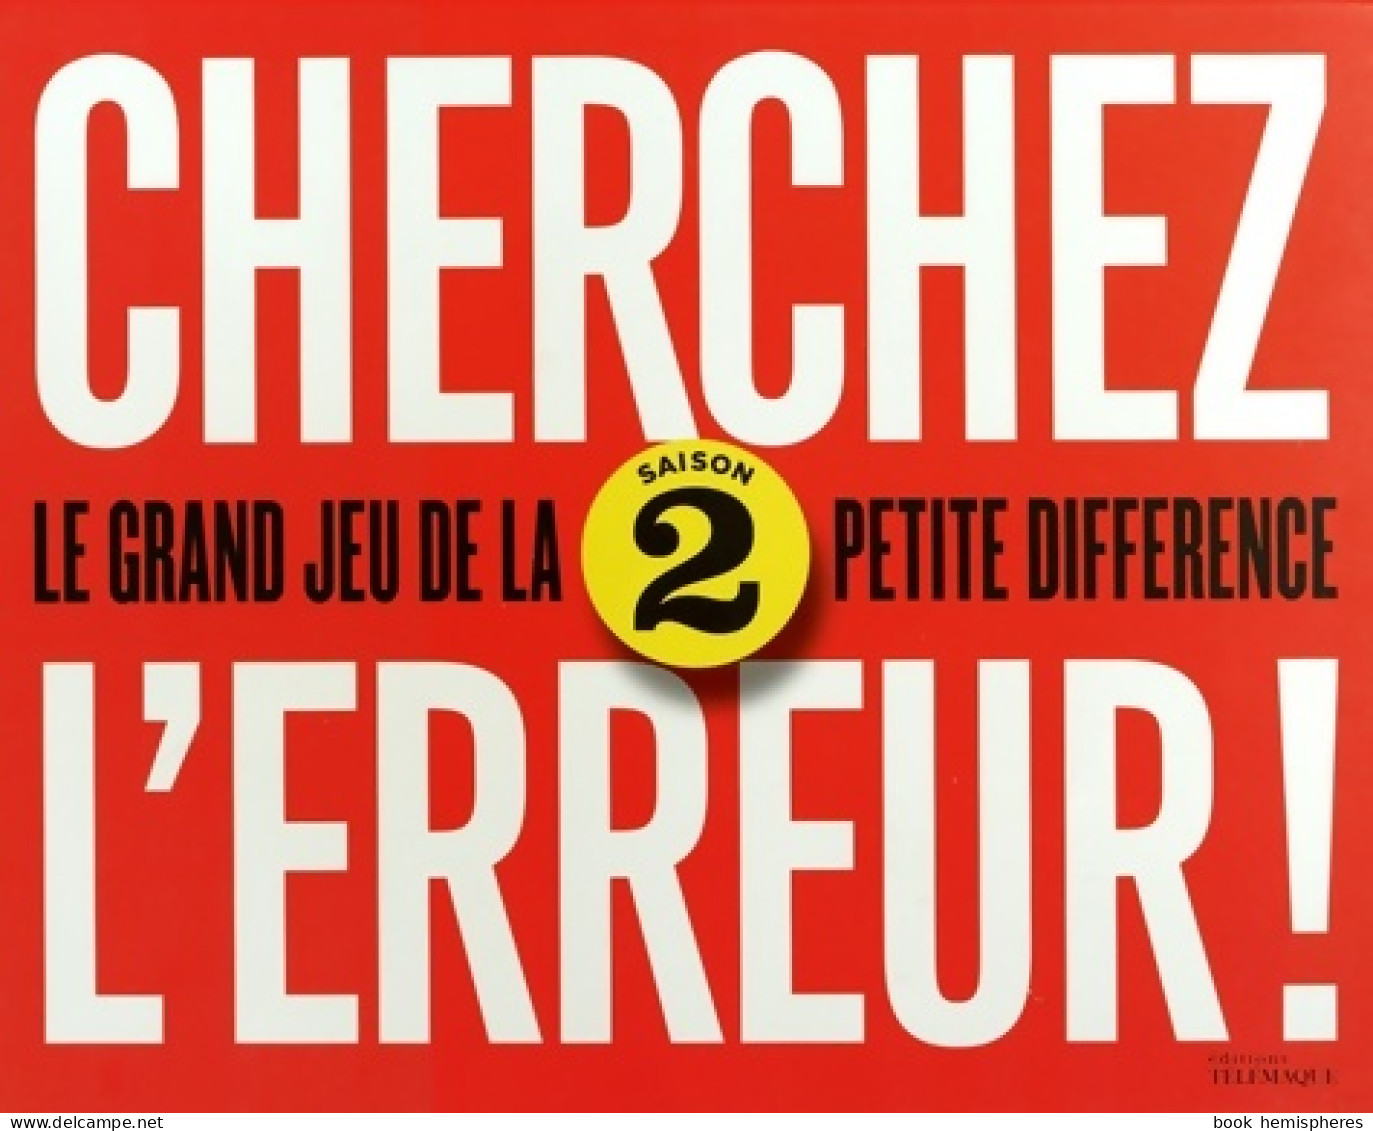 Cherchez L Erreur 2 (2014) De Télémaque - Juegos De Sociedad